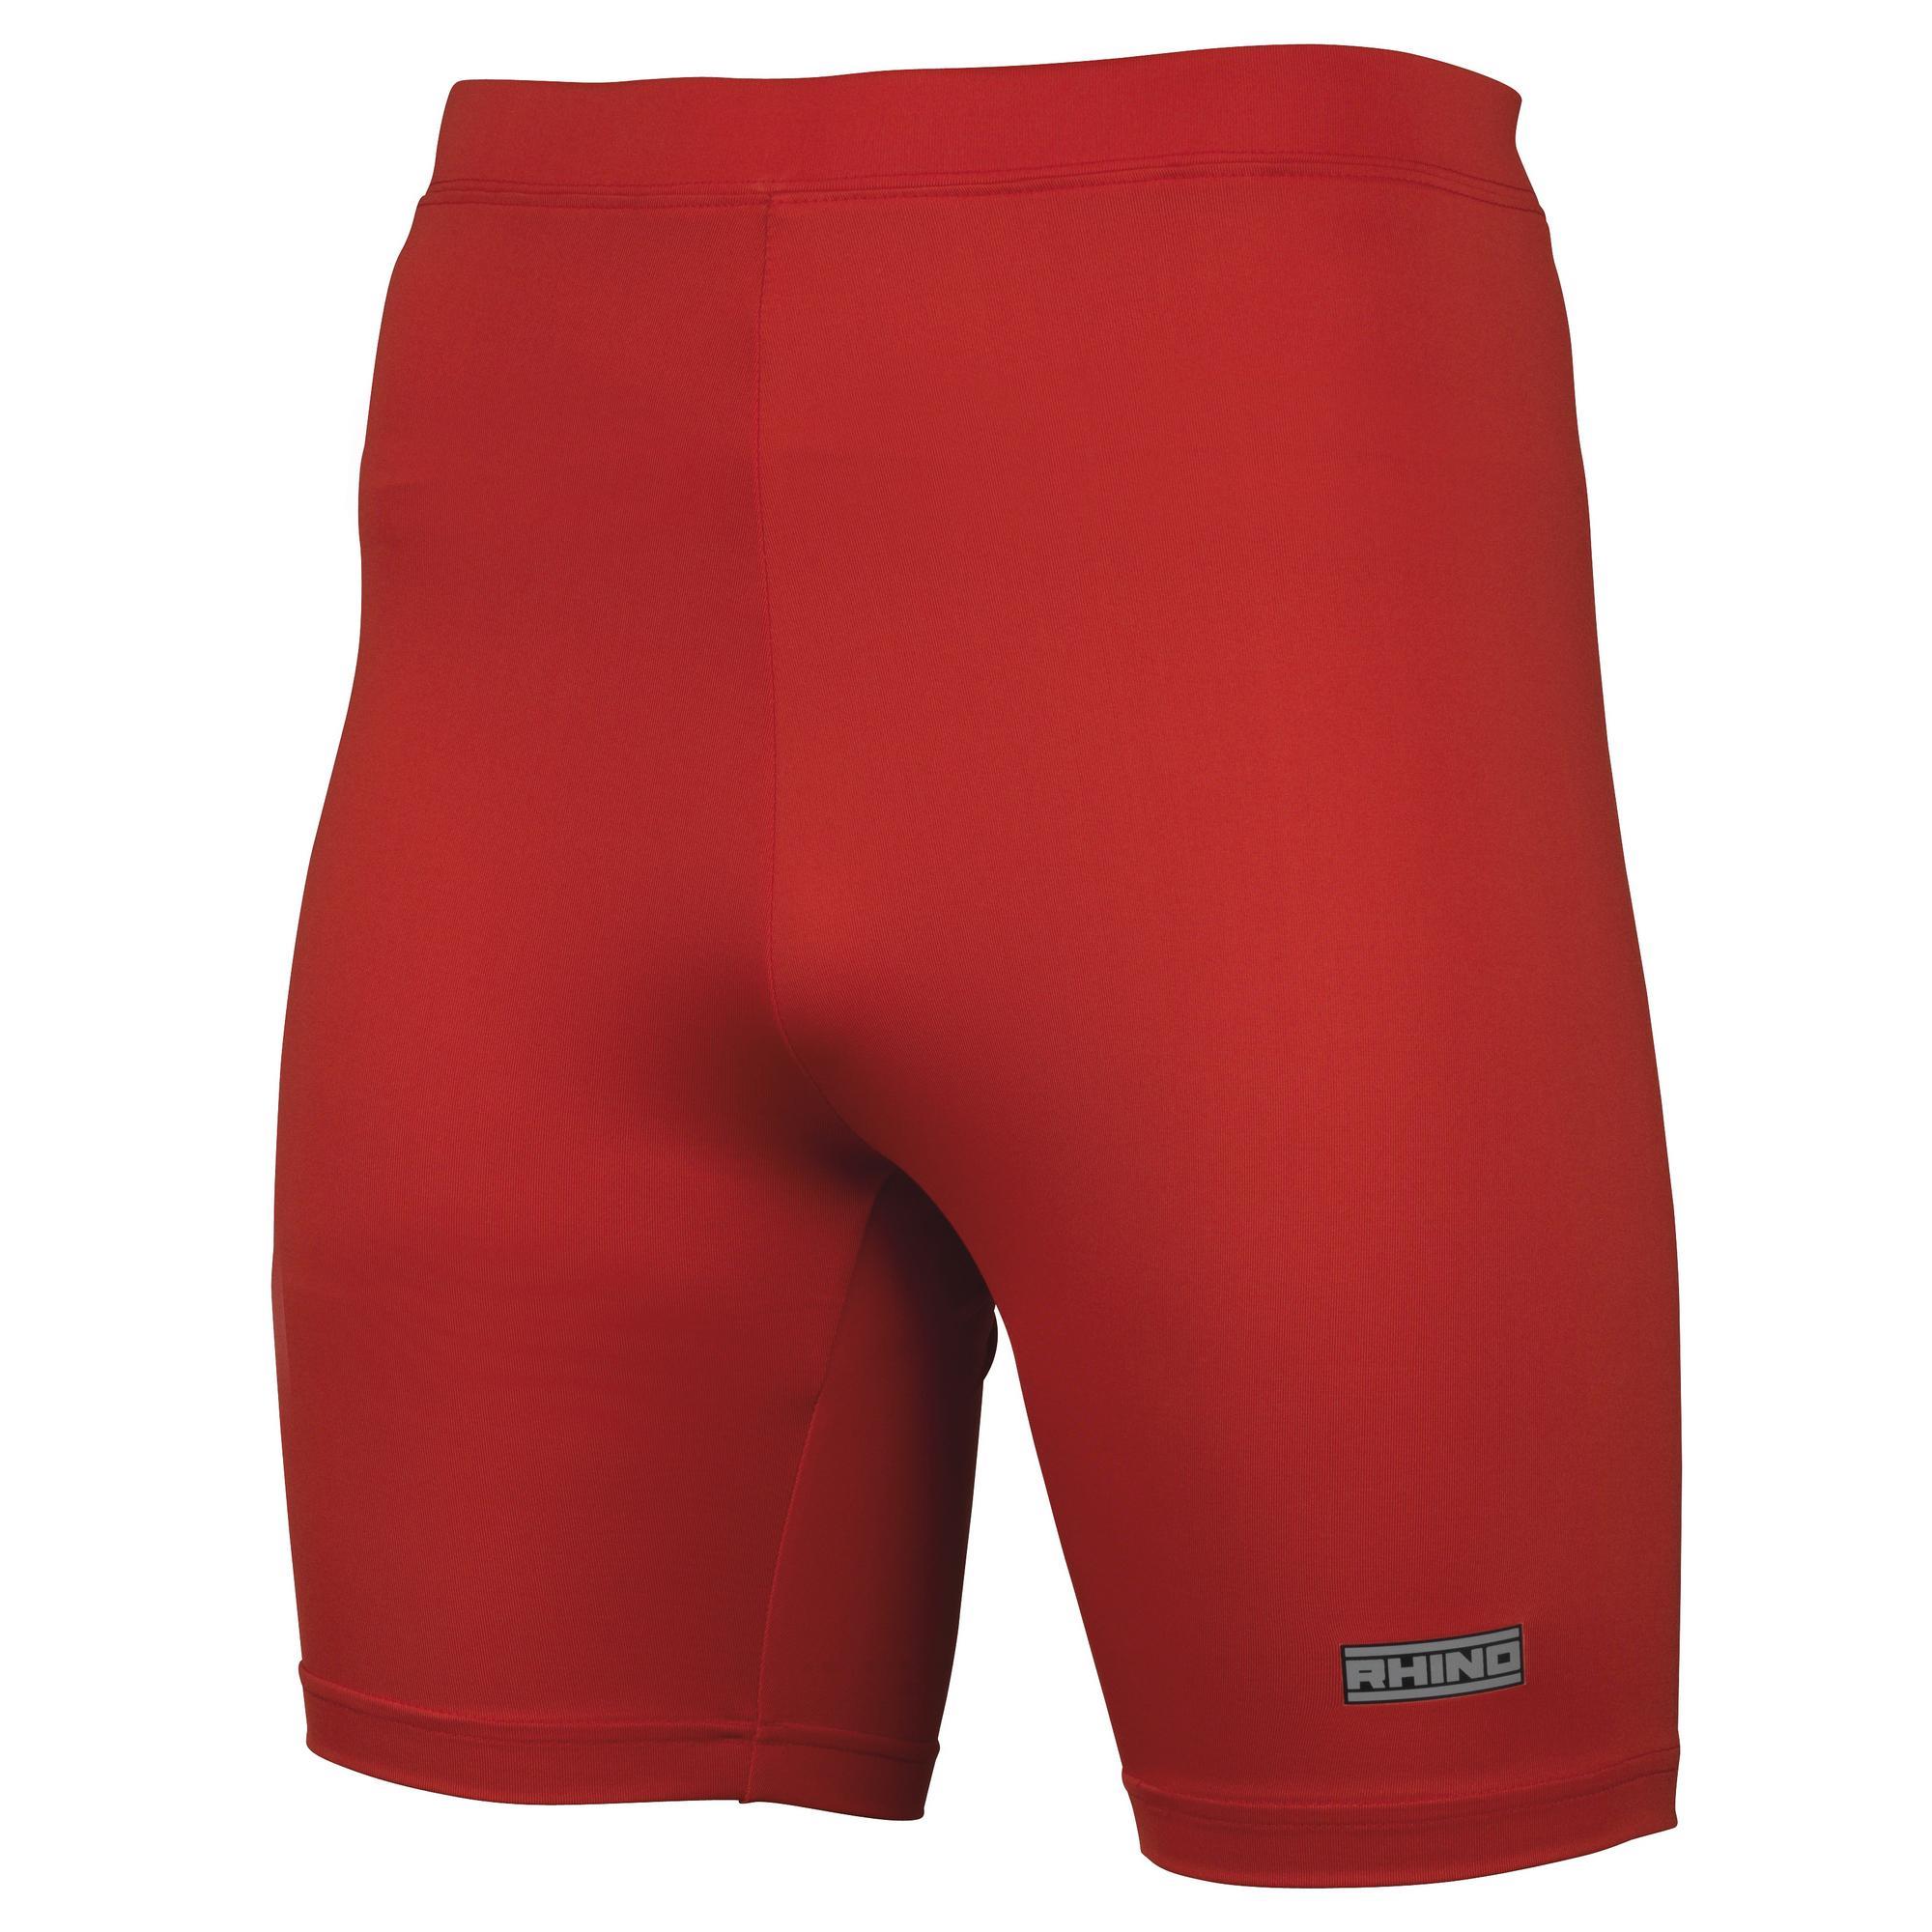 Rhino Mens Sports Base Layer Shorts (Red) (L/XL)